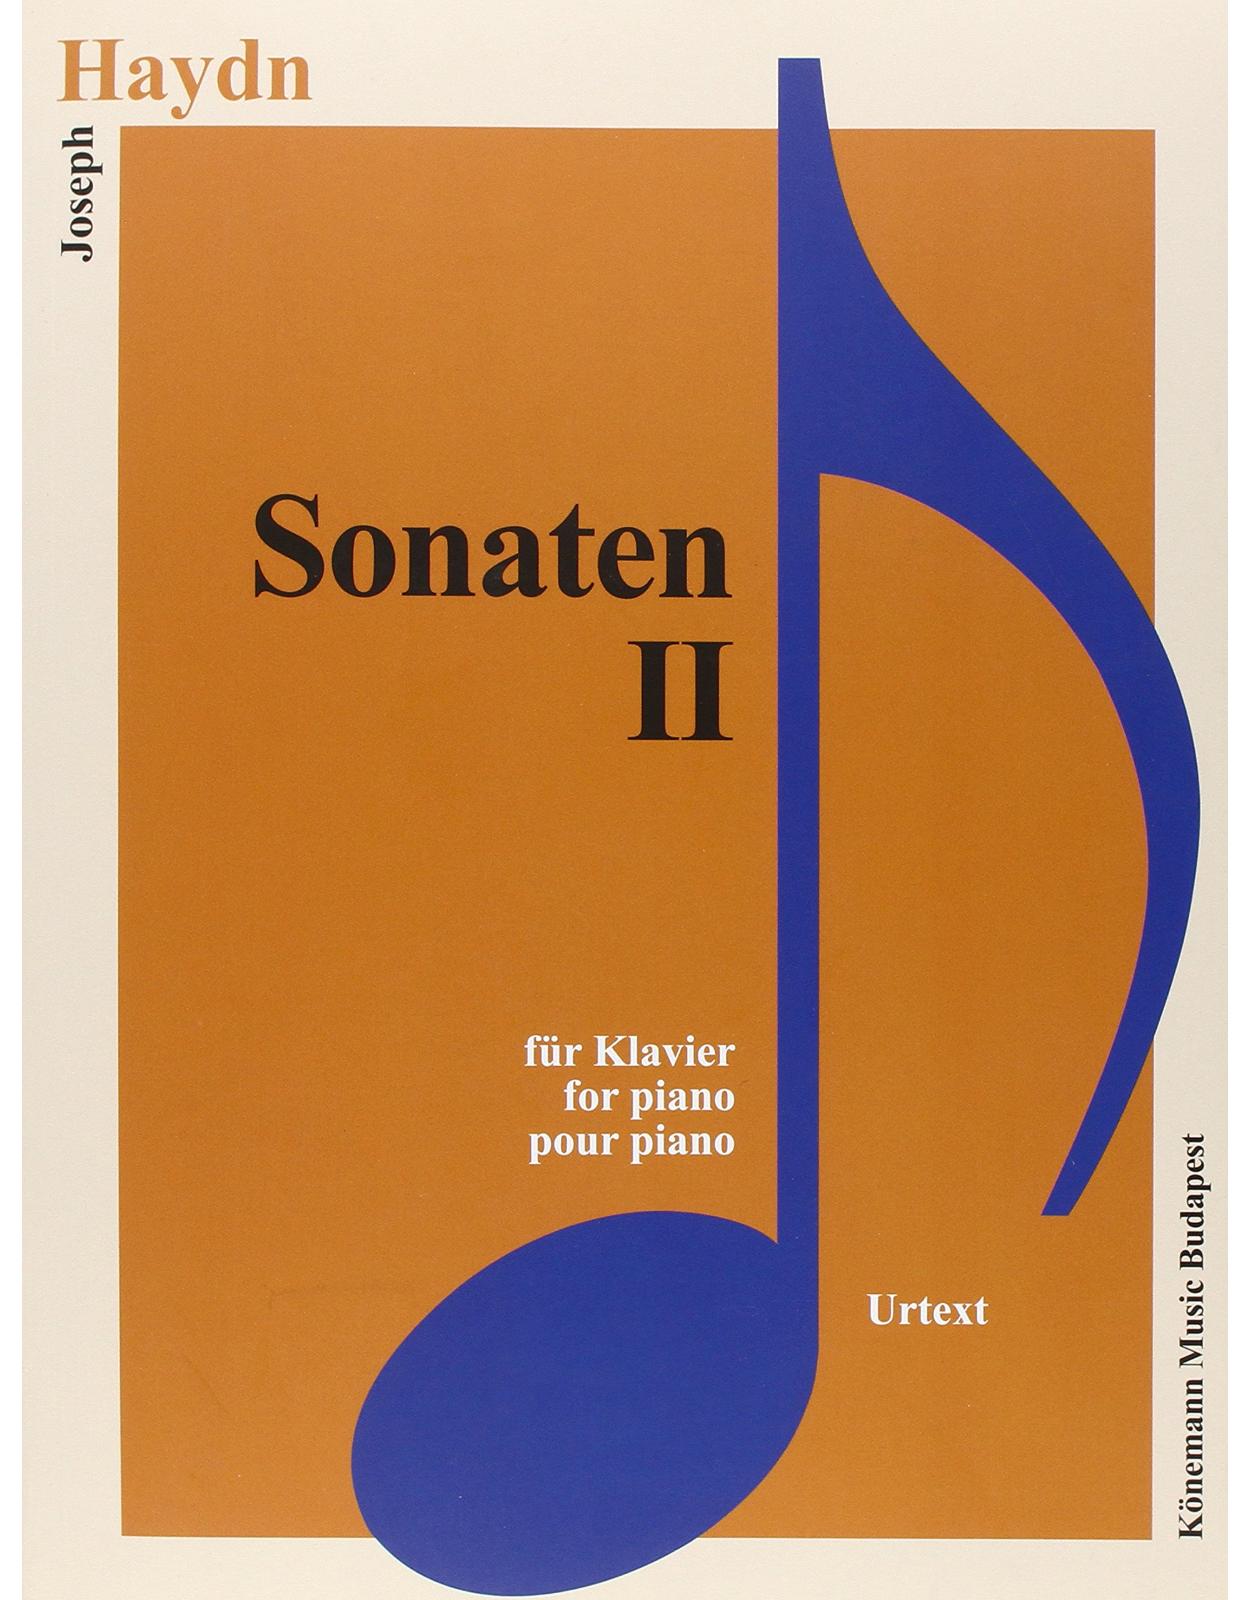 Haydn, Sonaten II 